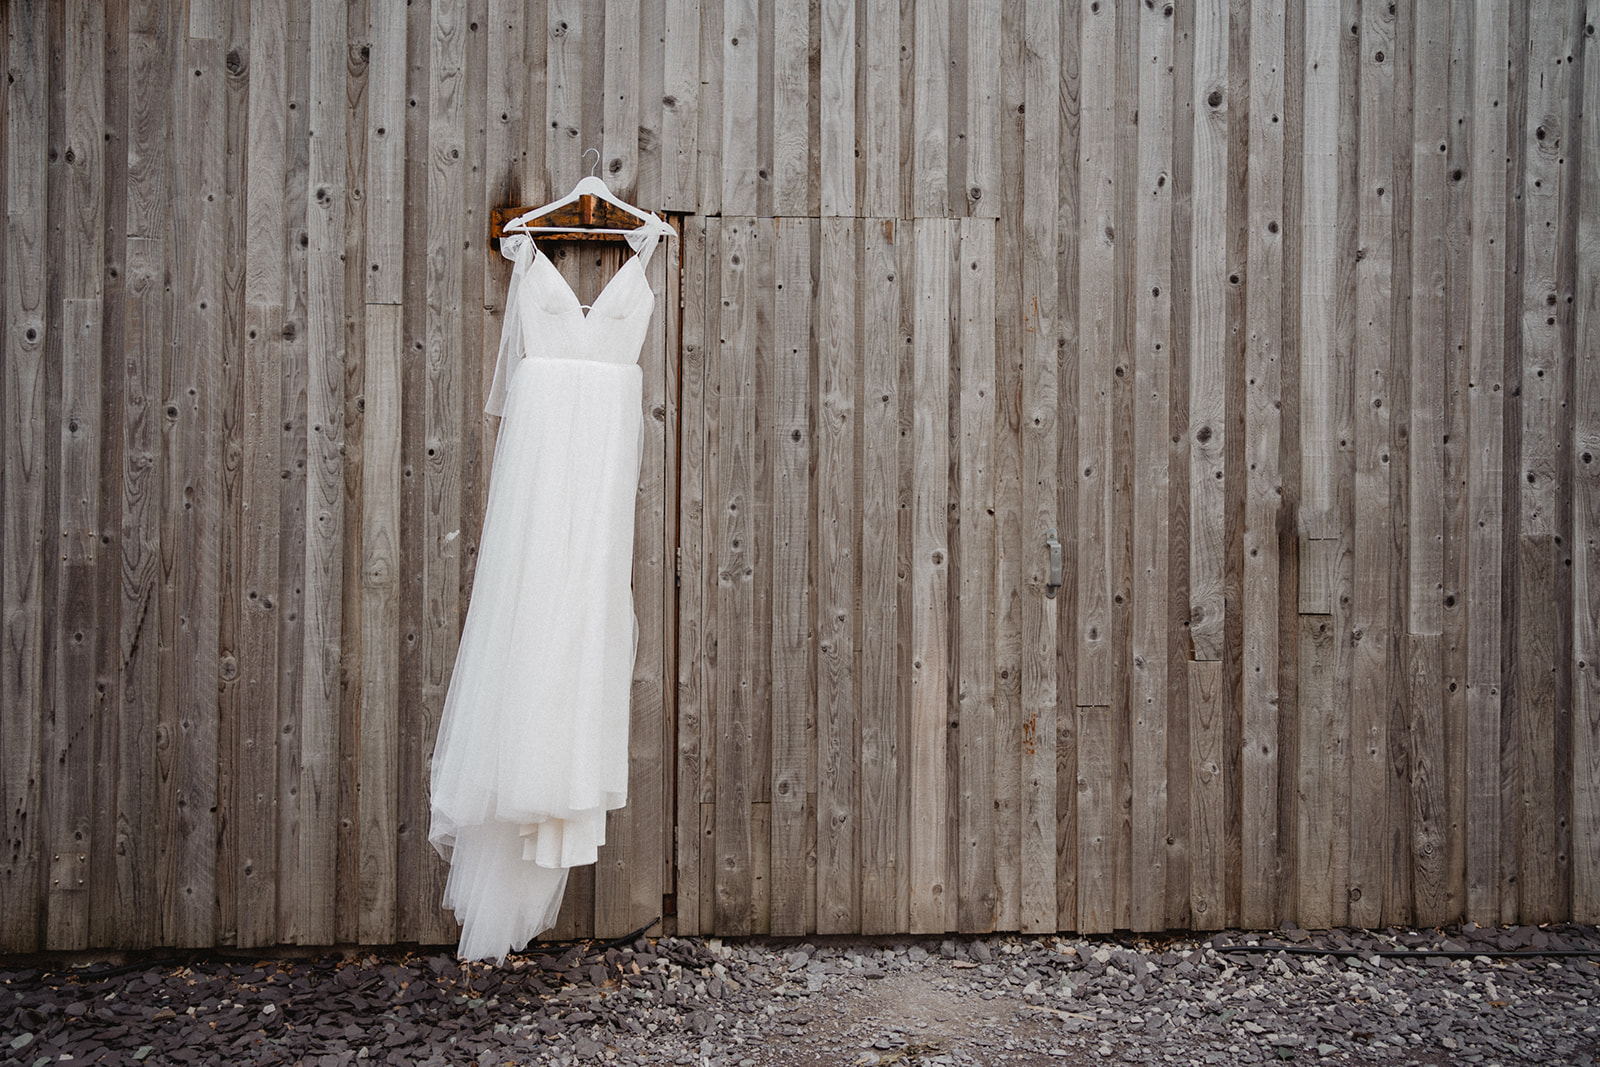 Bride's Dress hanging at the barn